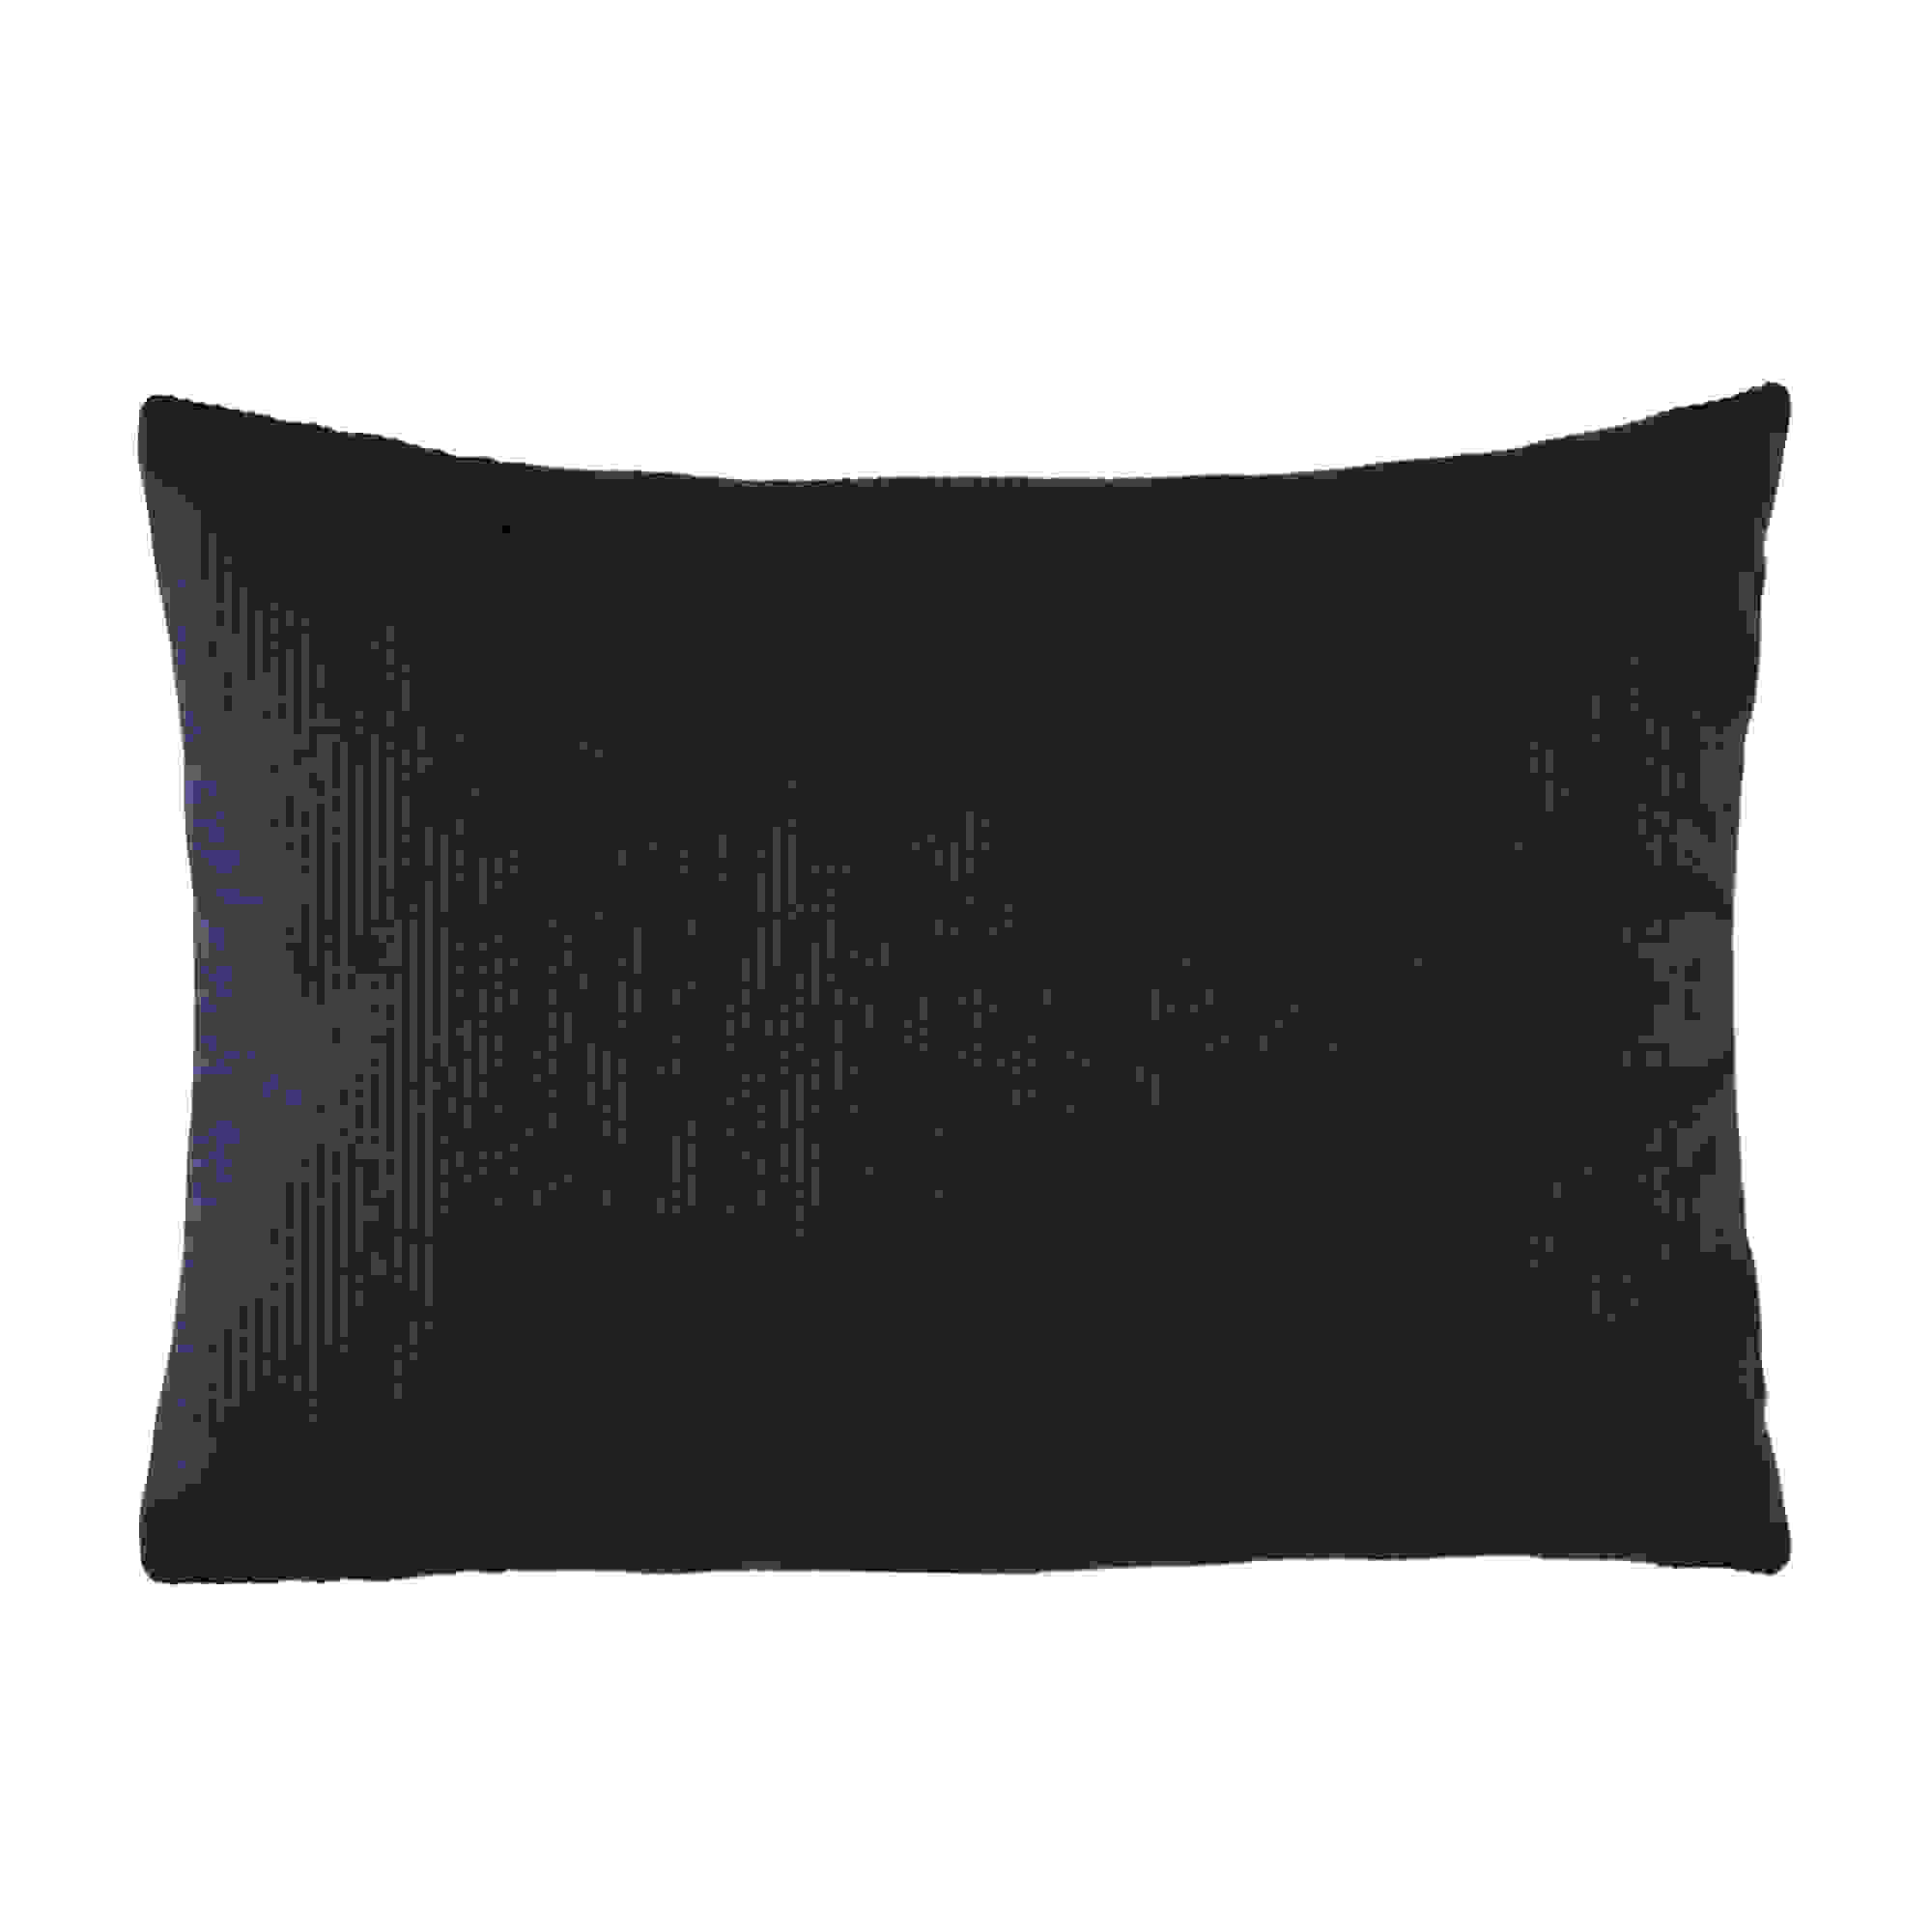 Navy Blue Ribbed Texture Velvet Lumbar Pillow